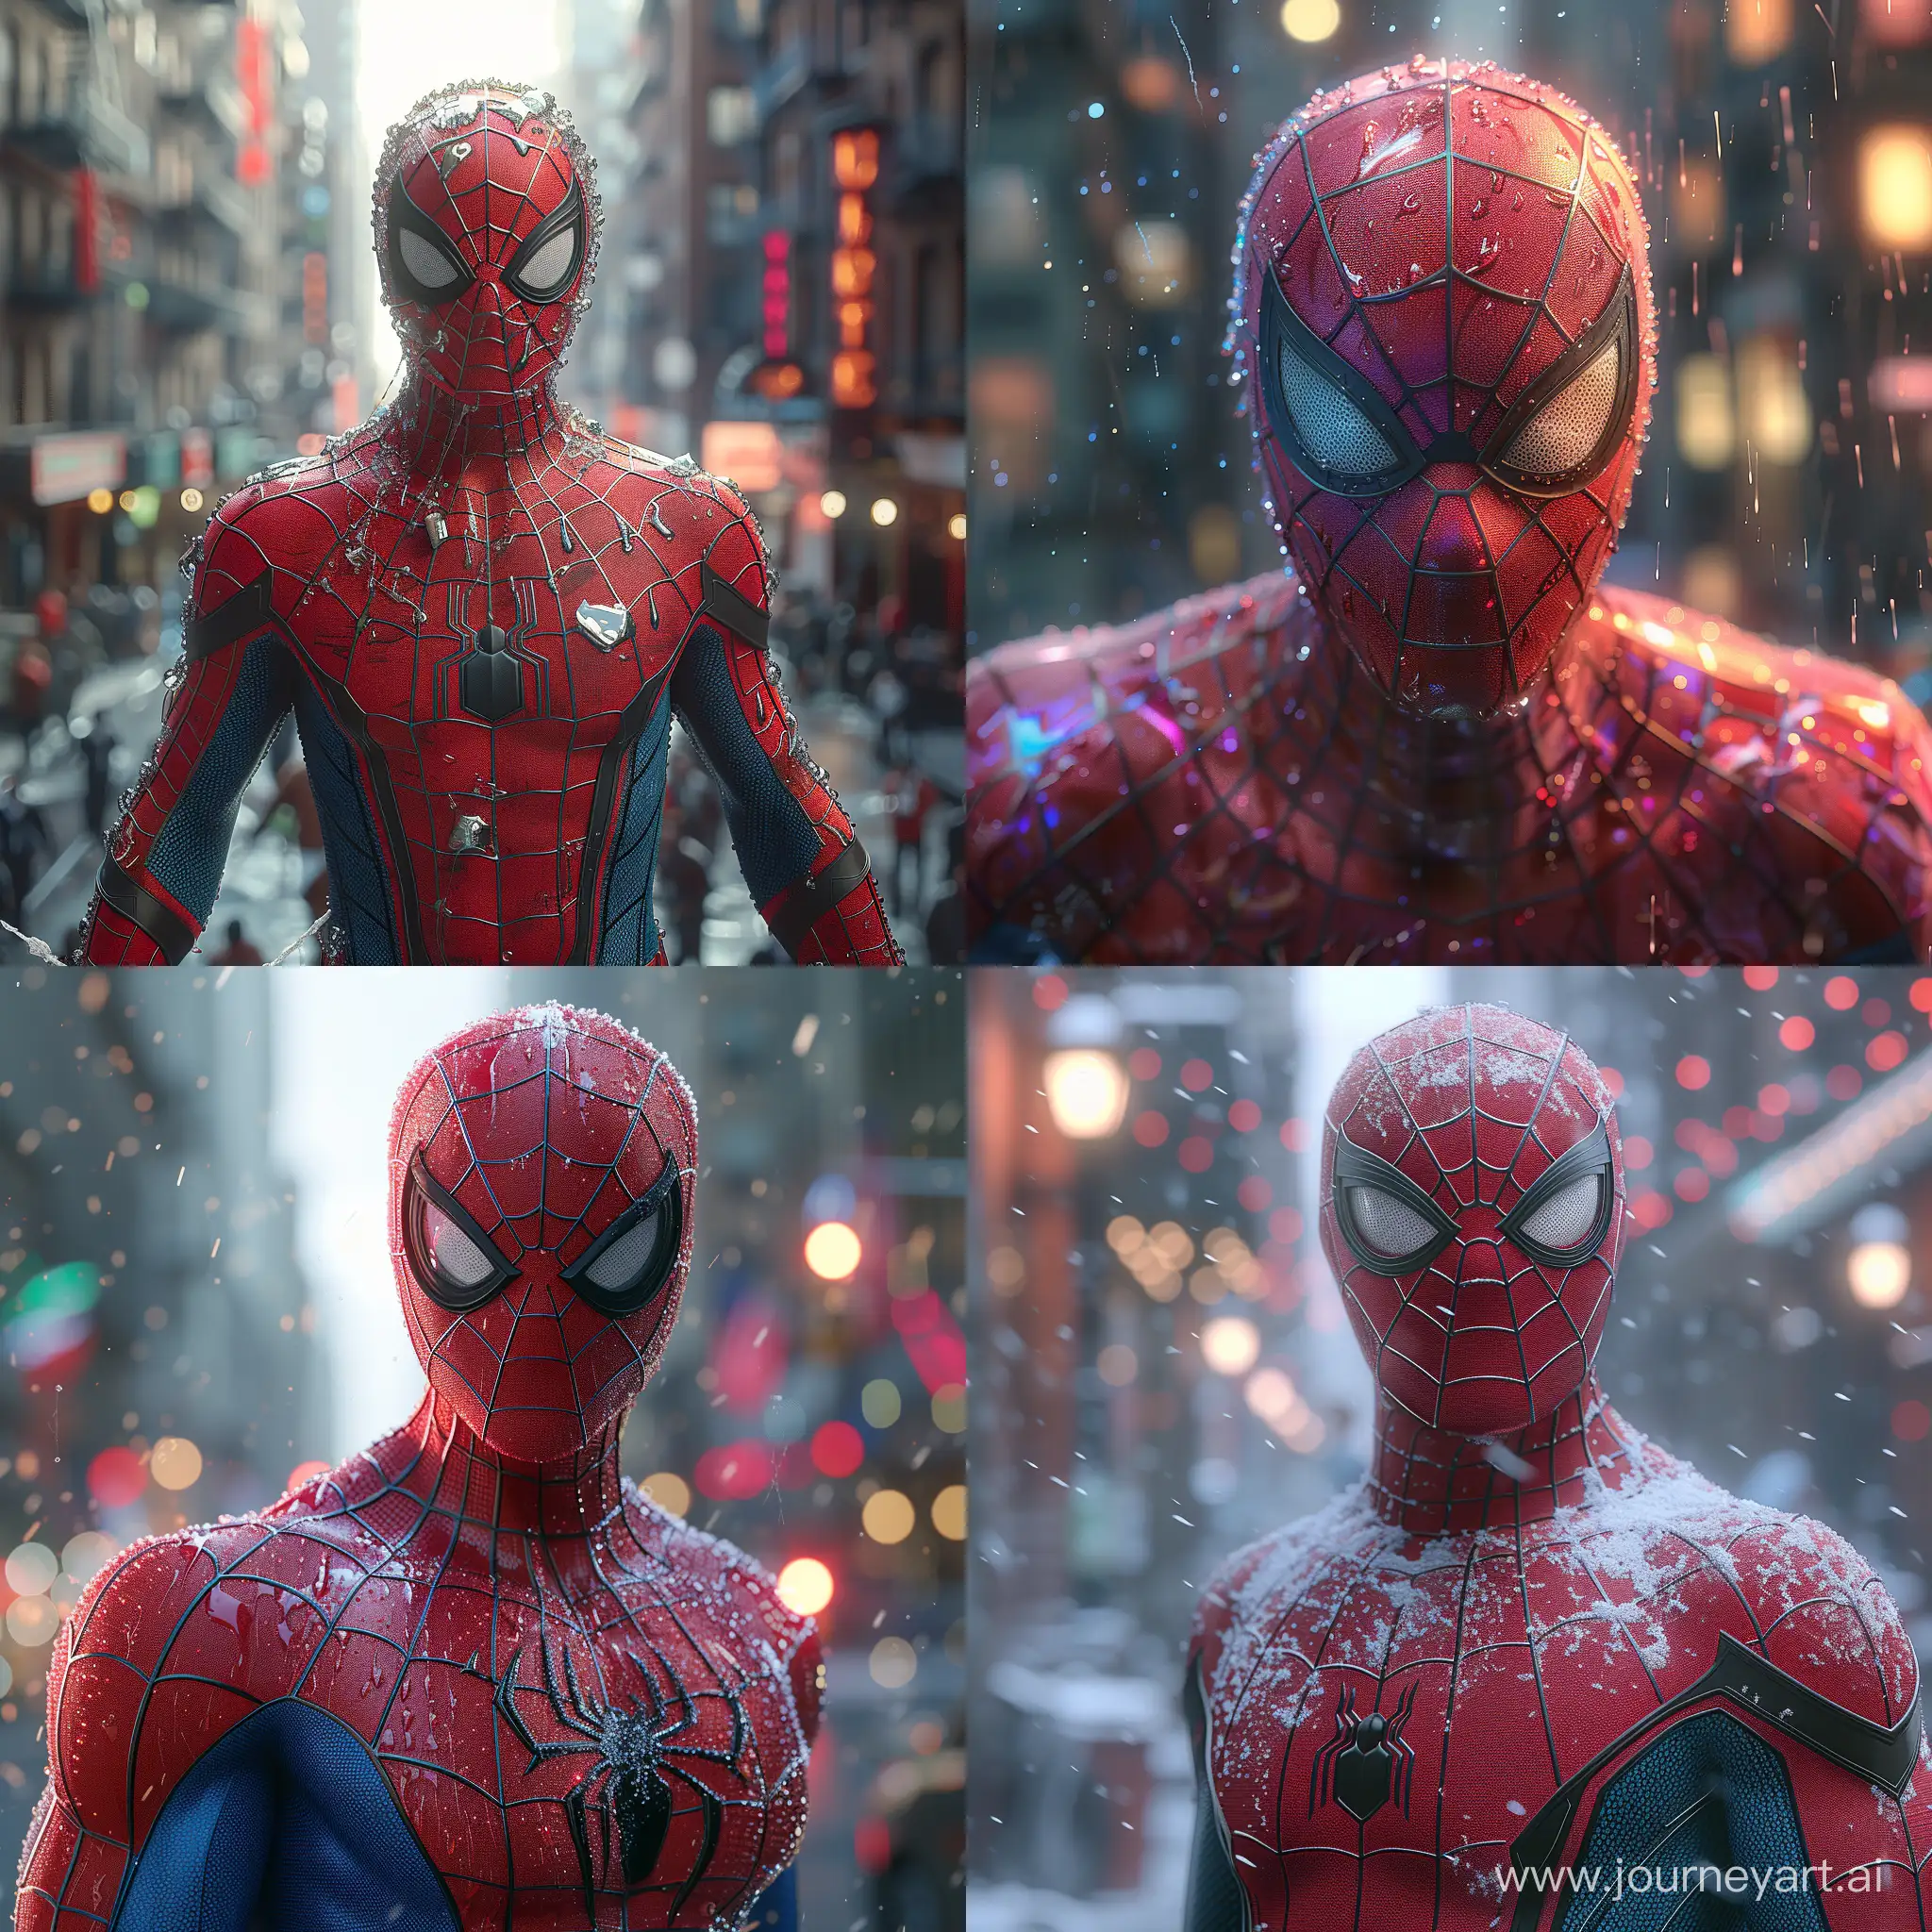 Dynamic-SpiderMan-Art-HyperRealistic-32K-Image-with-Hidden-Details